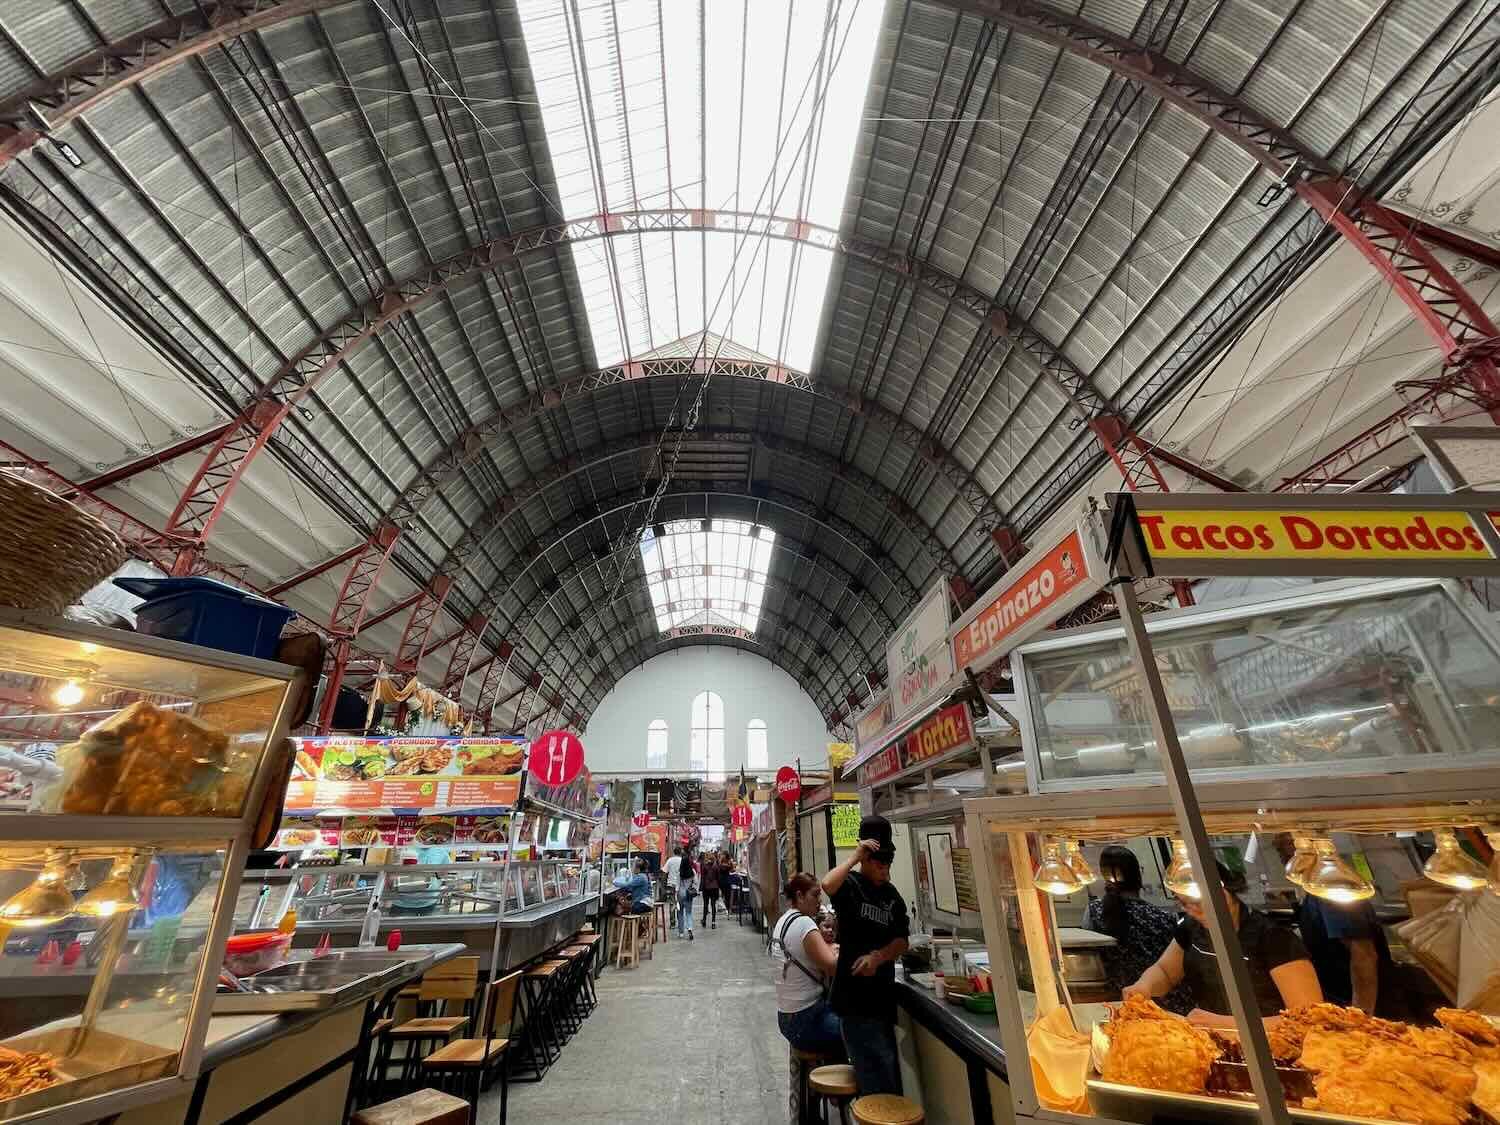 Mercado Hidalgo was originally designed to be a magnificent train station